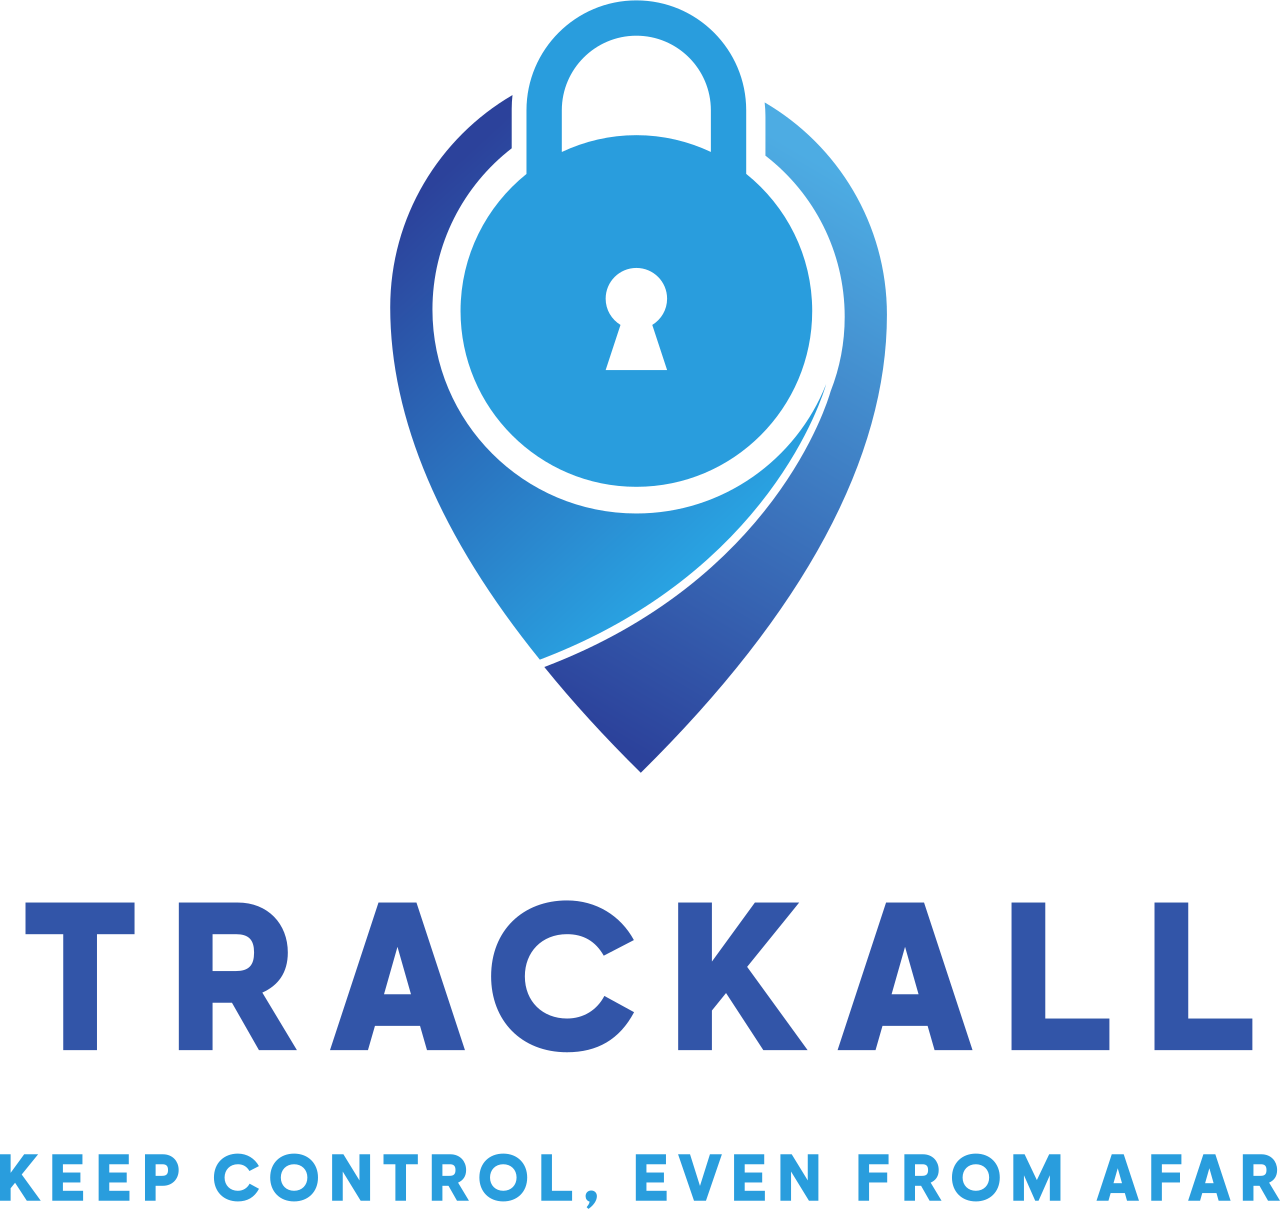 TrackAll's logo